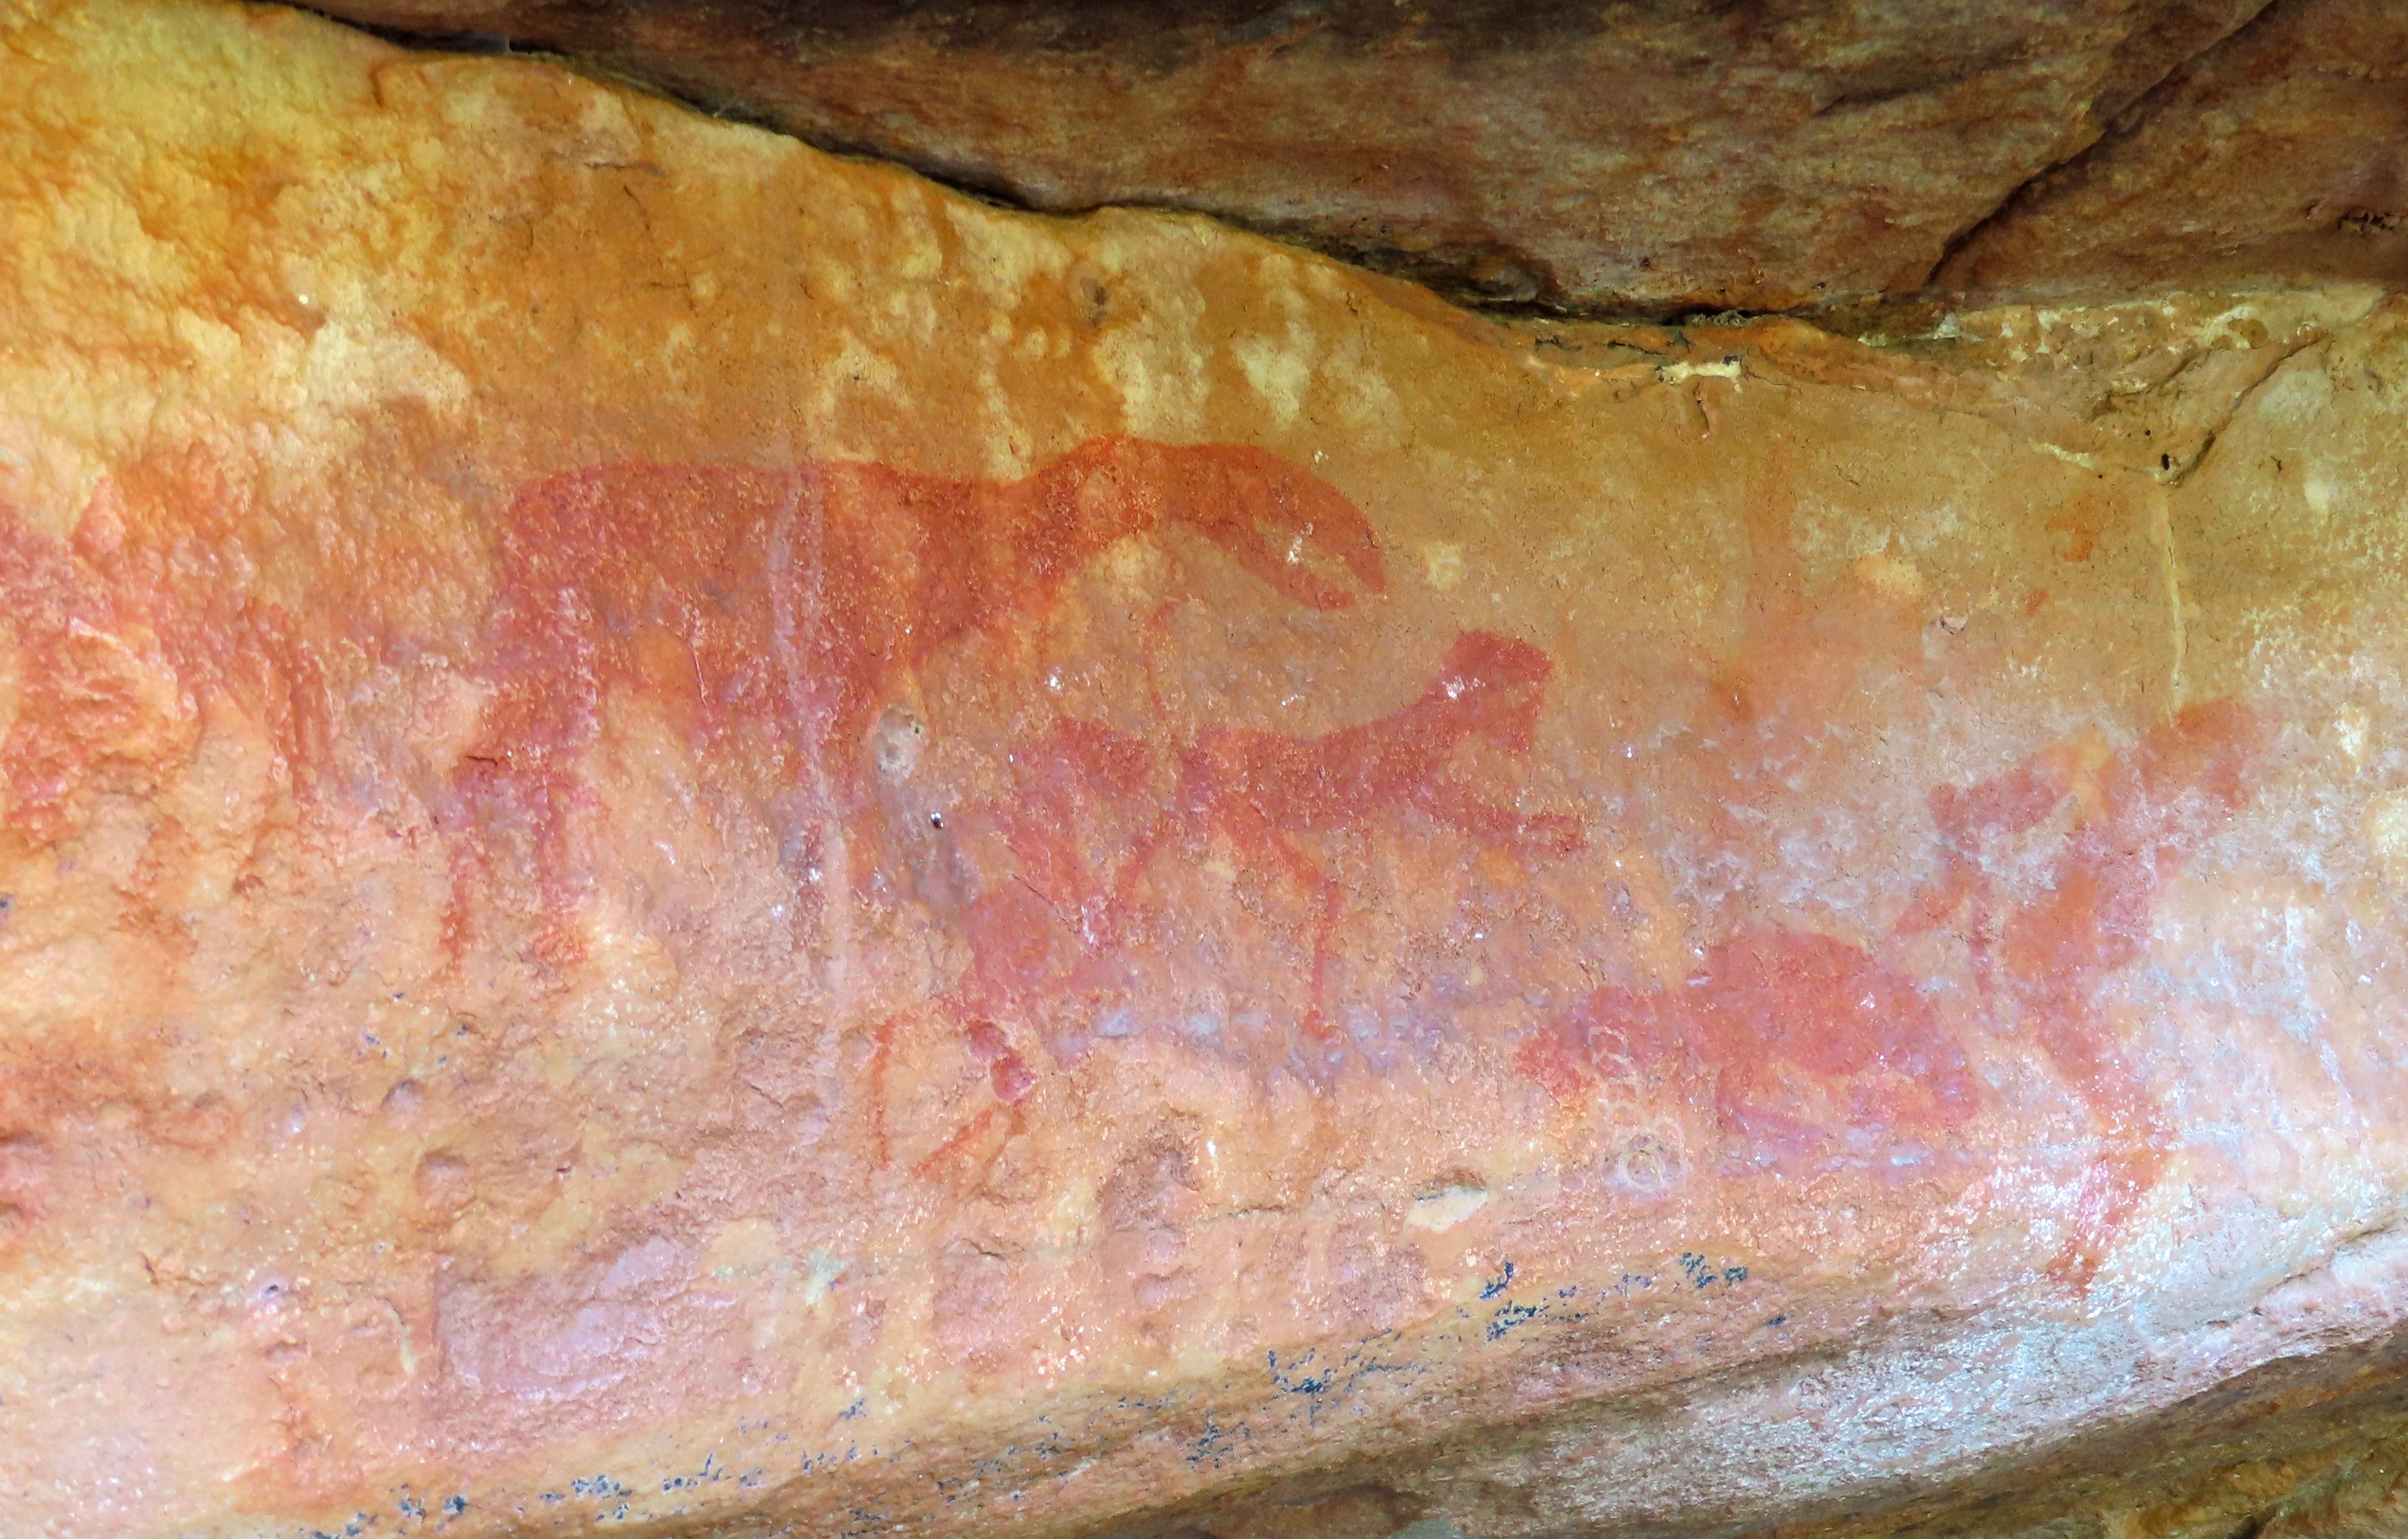 Bushman rock paintings by the Brandewyn River. Image: Ron Swilling